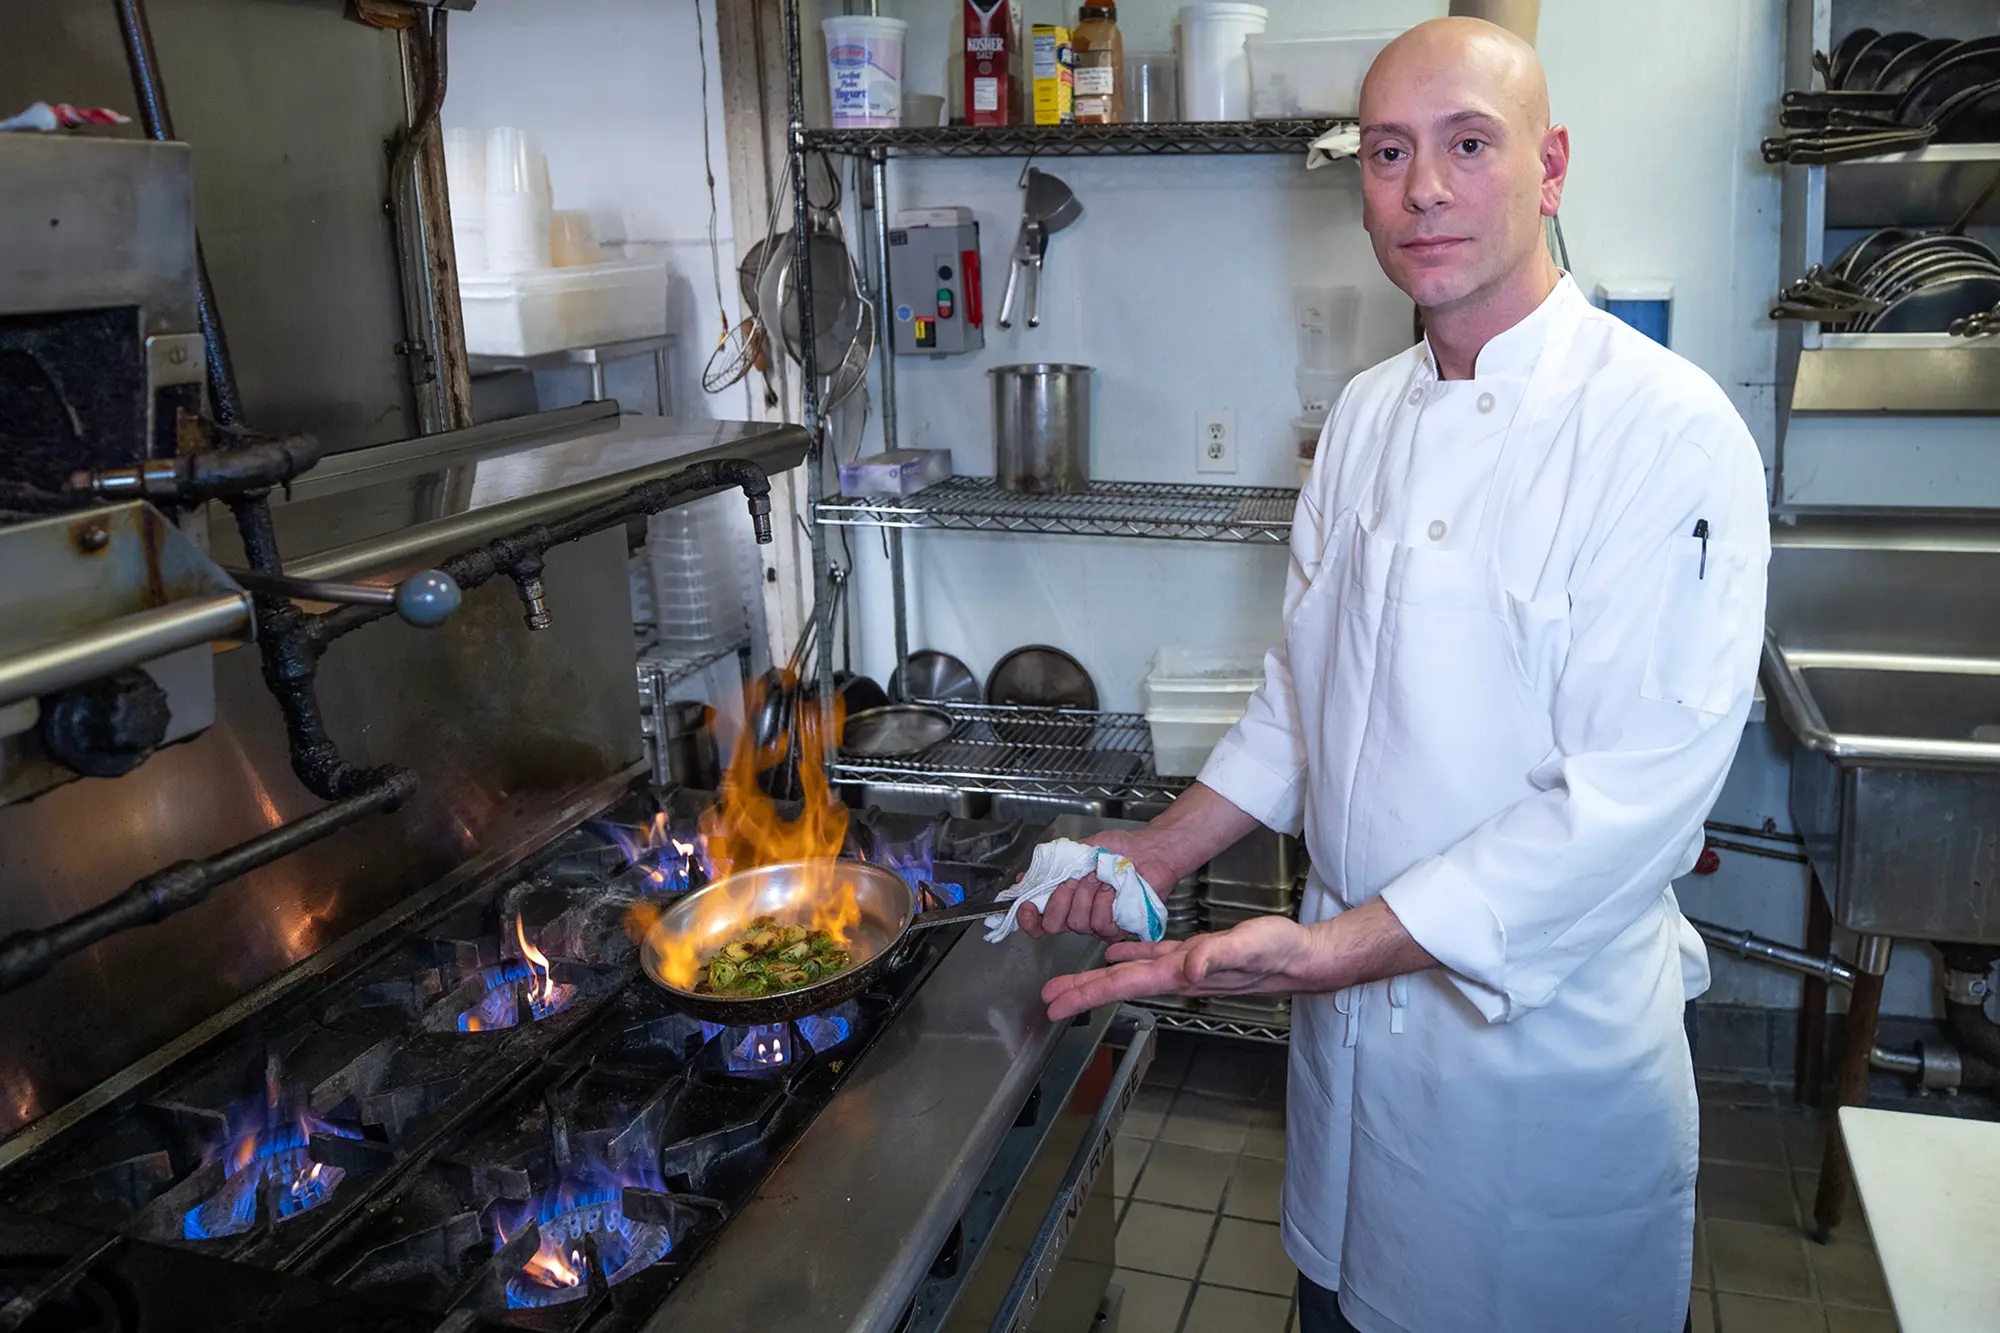 Biden administration gas stove ban idealeaves NYC restaurants feeling burned